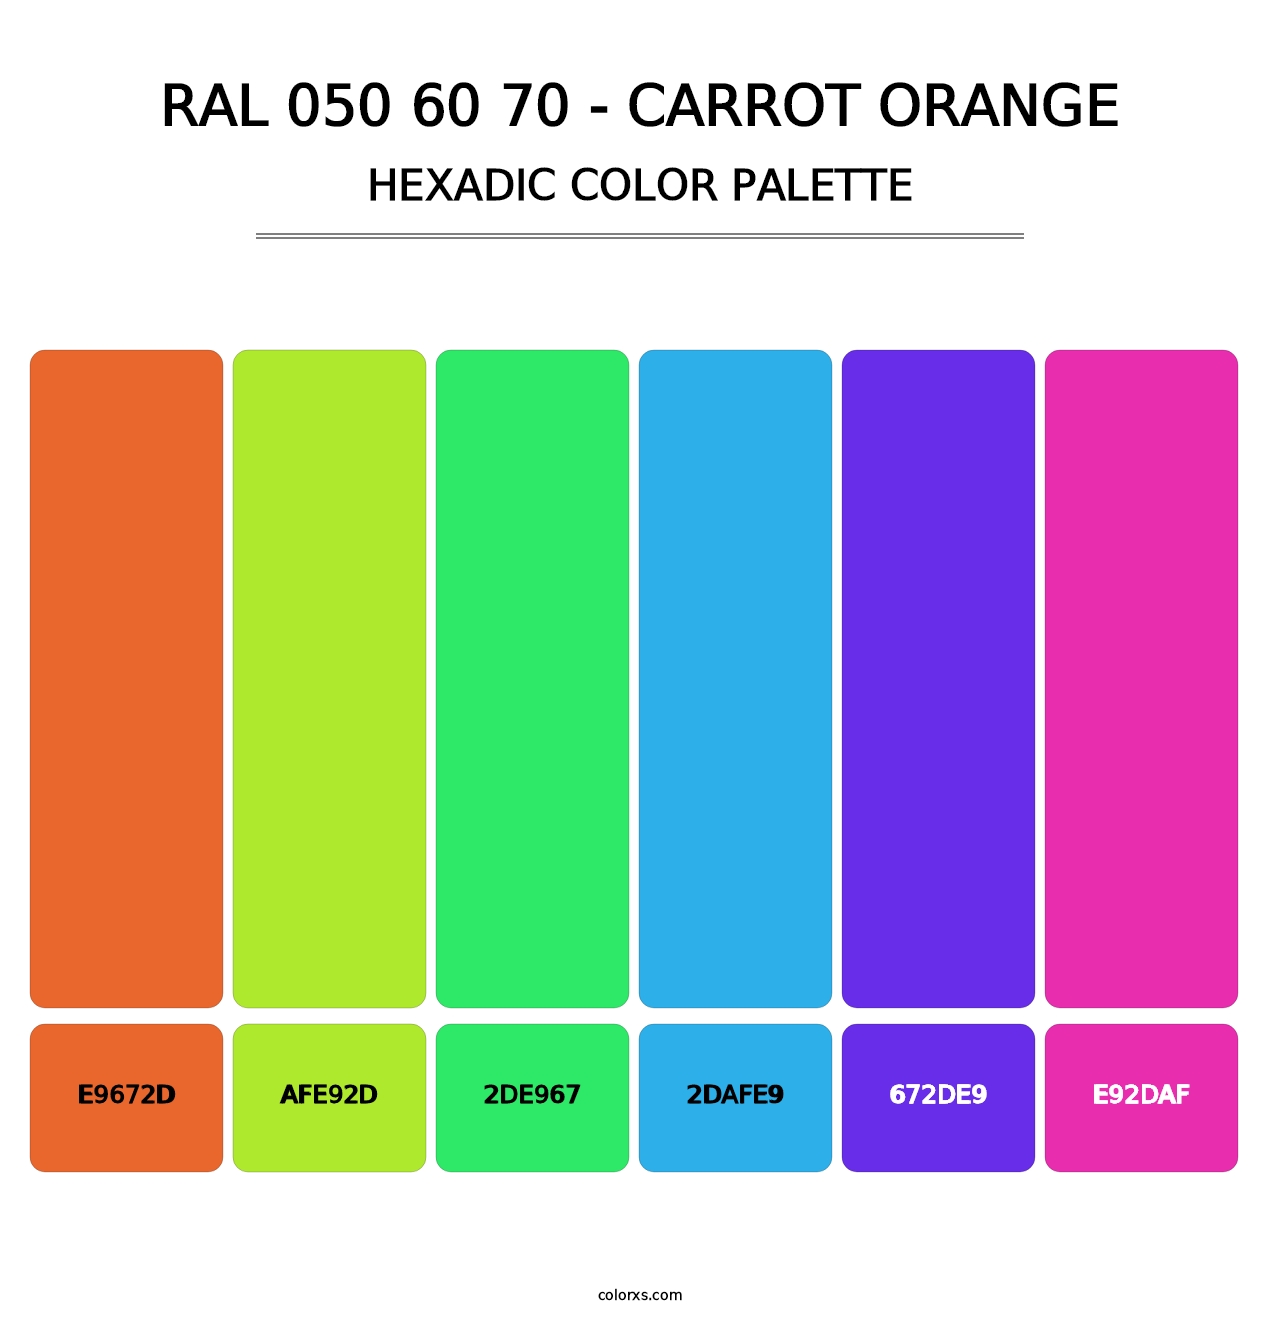 RAL 050 60 70 - Carrot Orange - Hexadic Color Palette